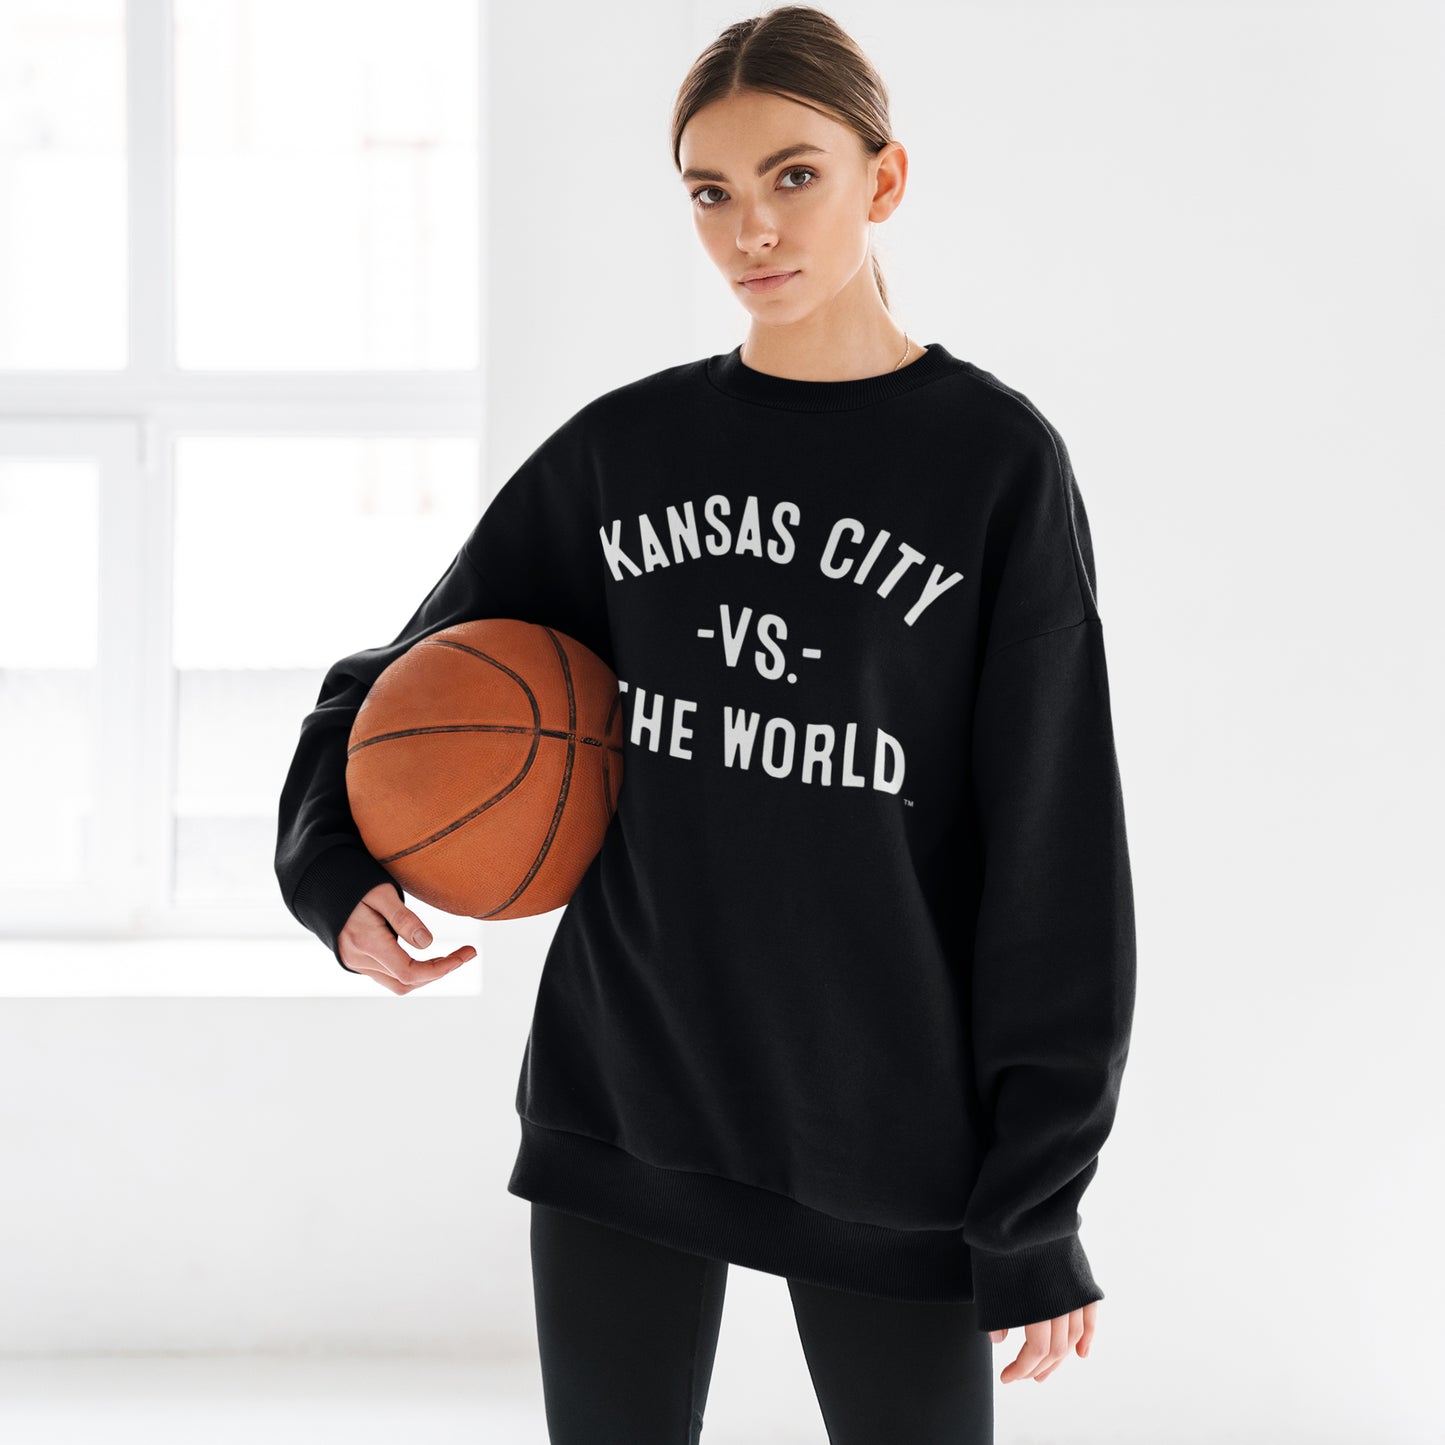 KANSAS CITY Vs The World Unisex Sweatshirt